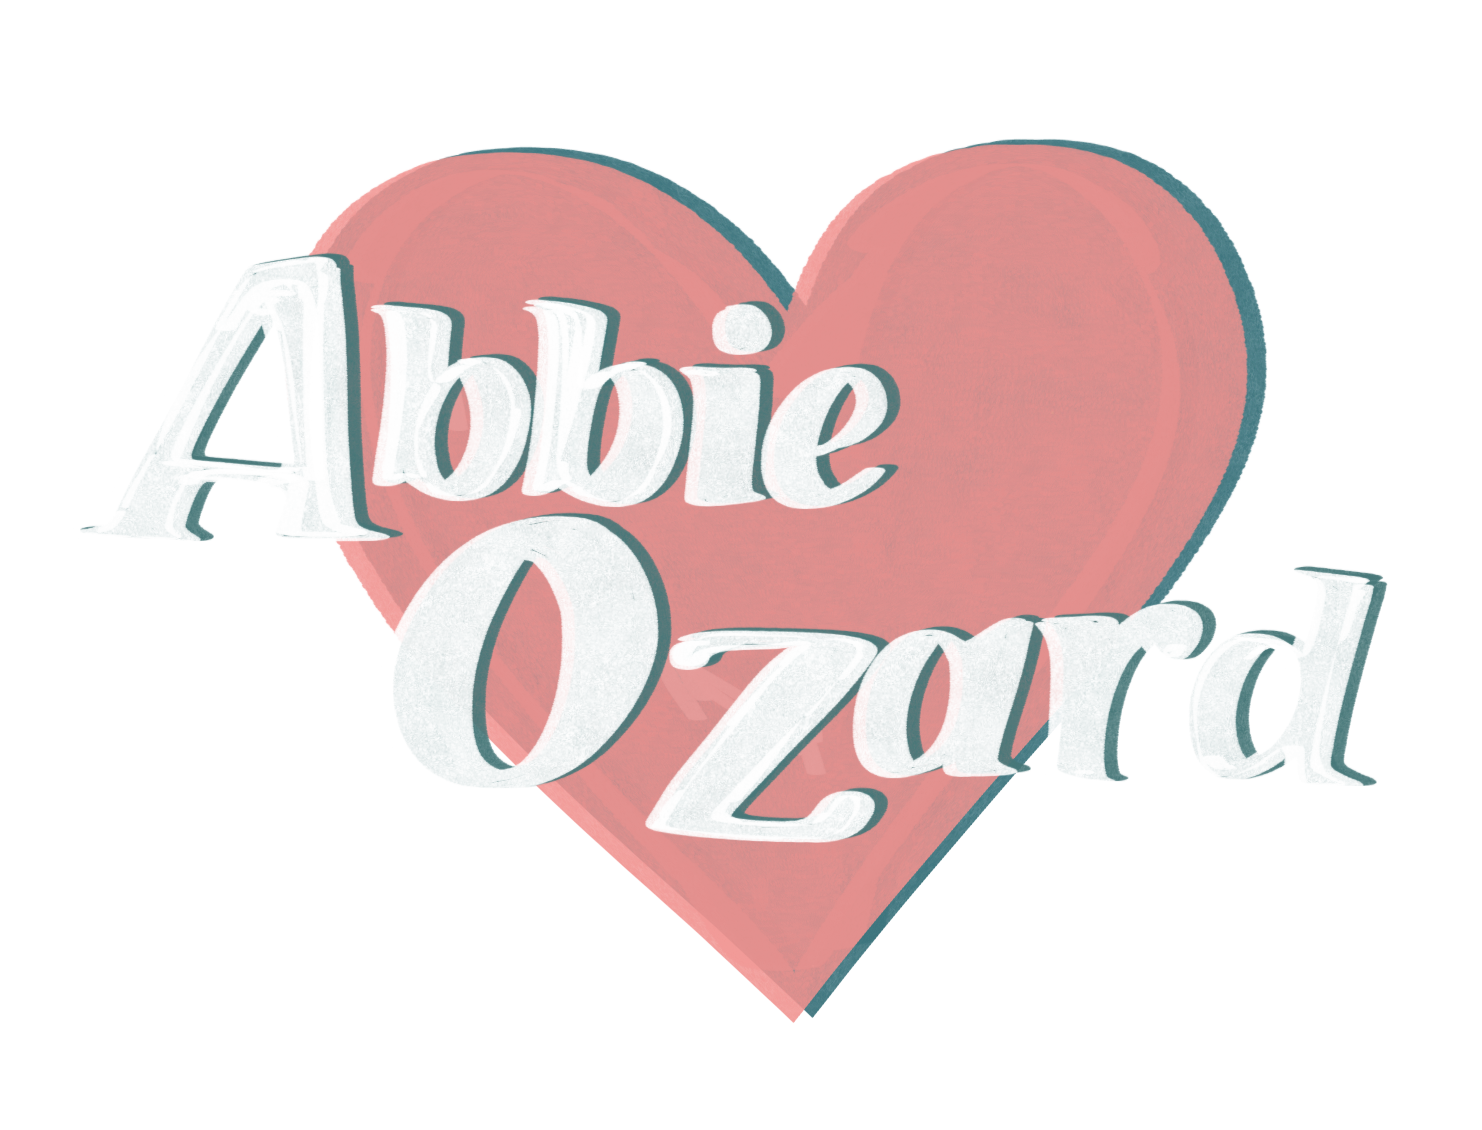 Abbie Ozard